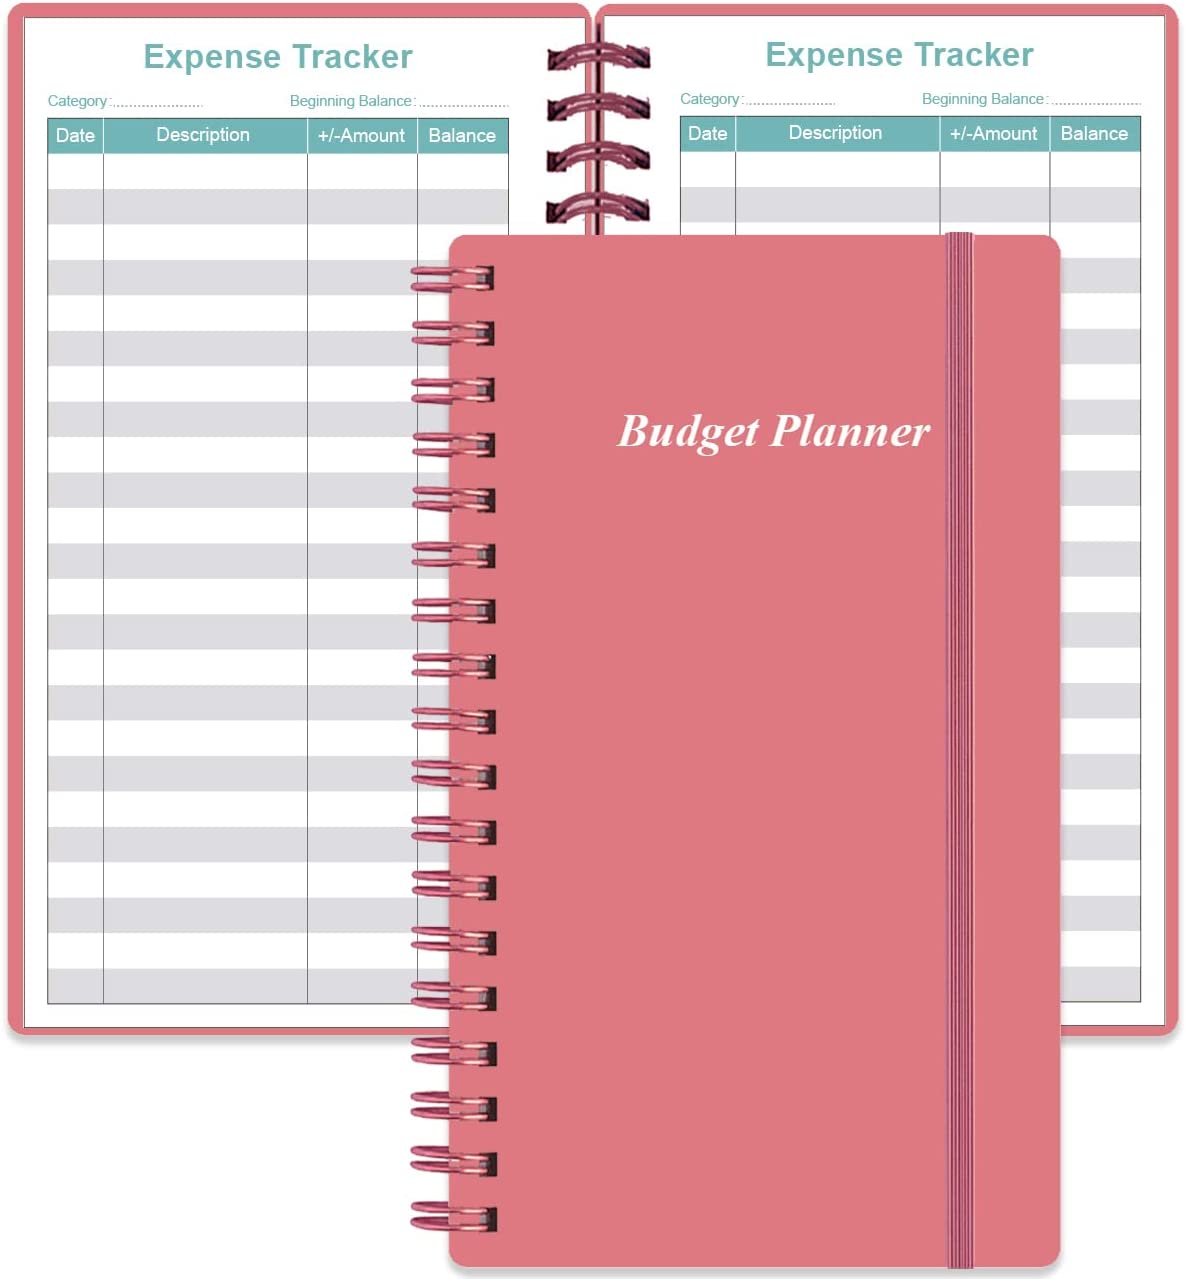 Budget Planner - A6 Expense Budget Tracker, Budget [...]